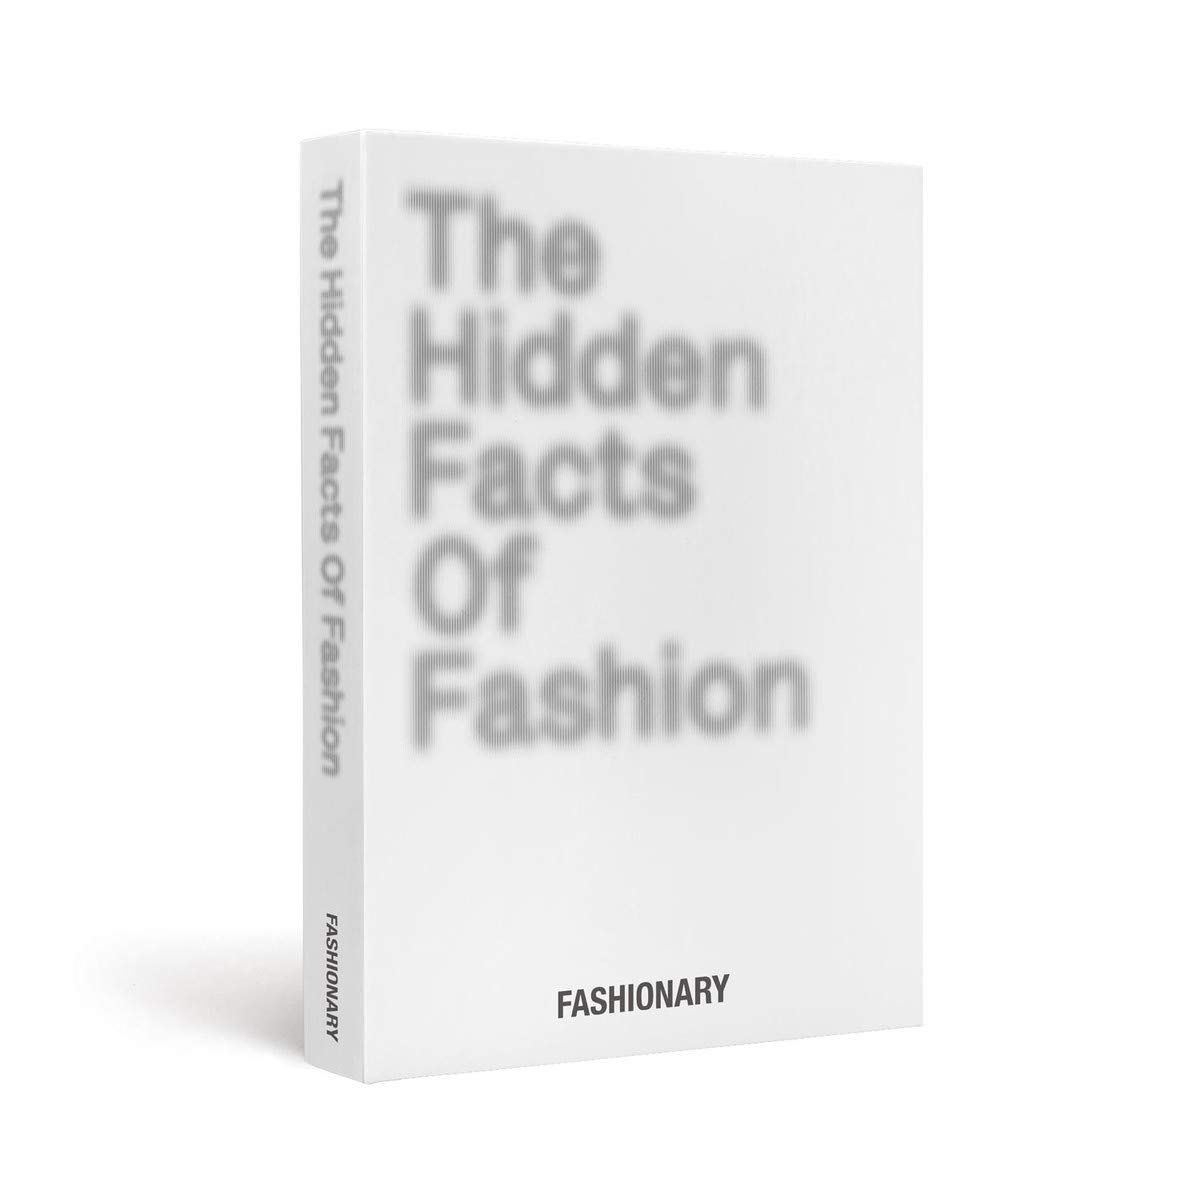  The Hidden Facts of Fashion_FASHIONARY_9789887711087_Fashionary International Limited 